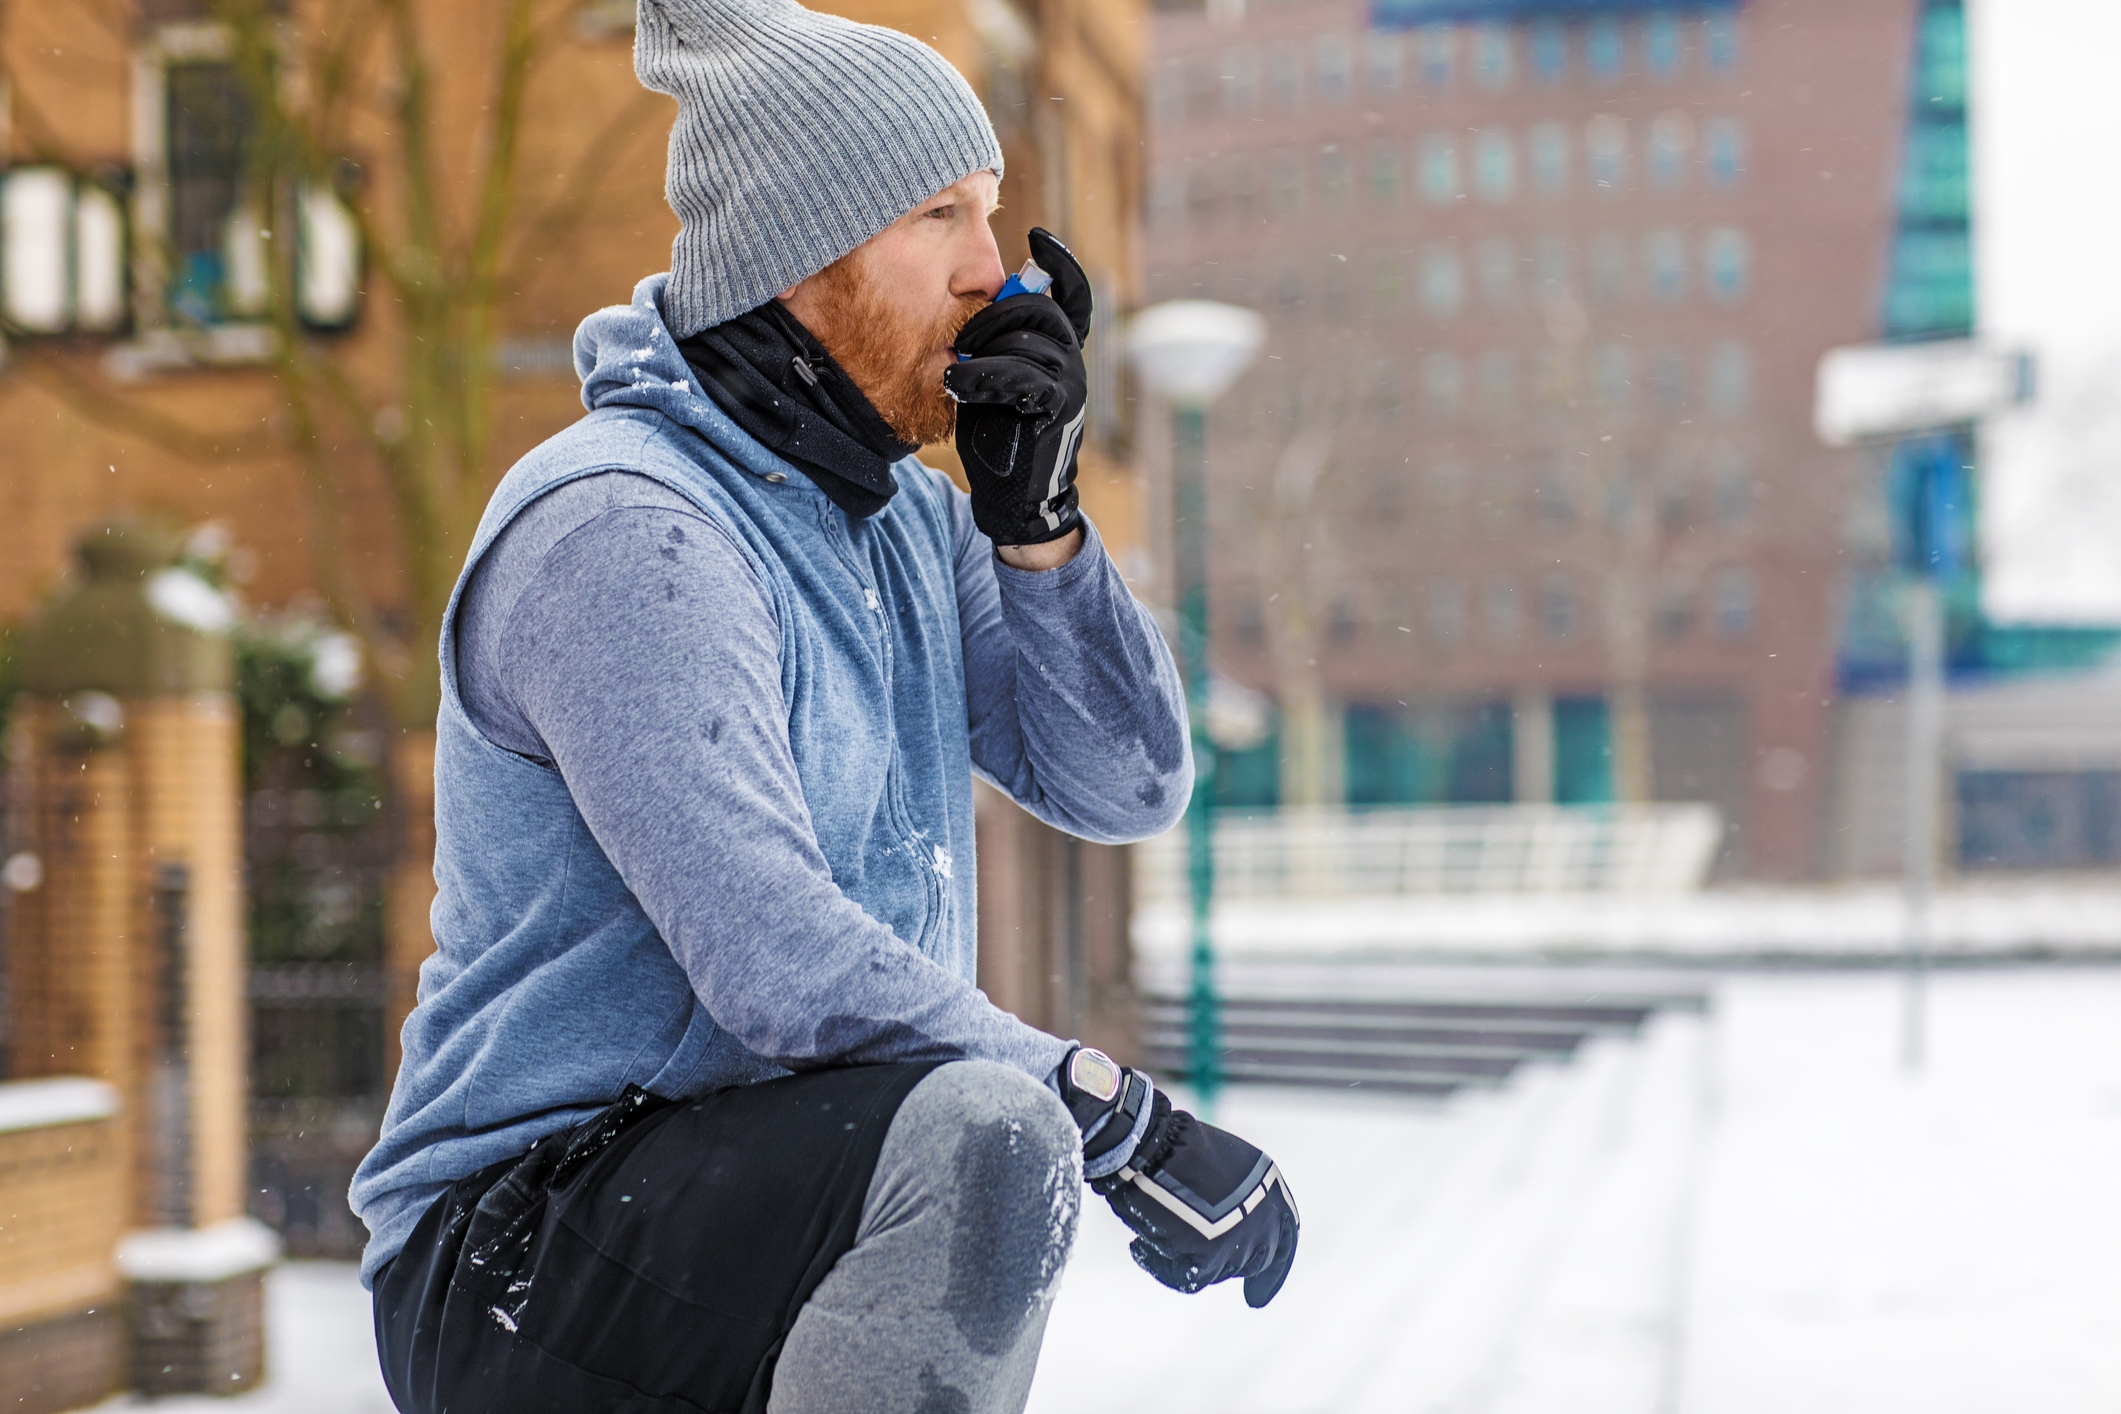 Man using an inhaler for asthma symptoms in winter